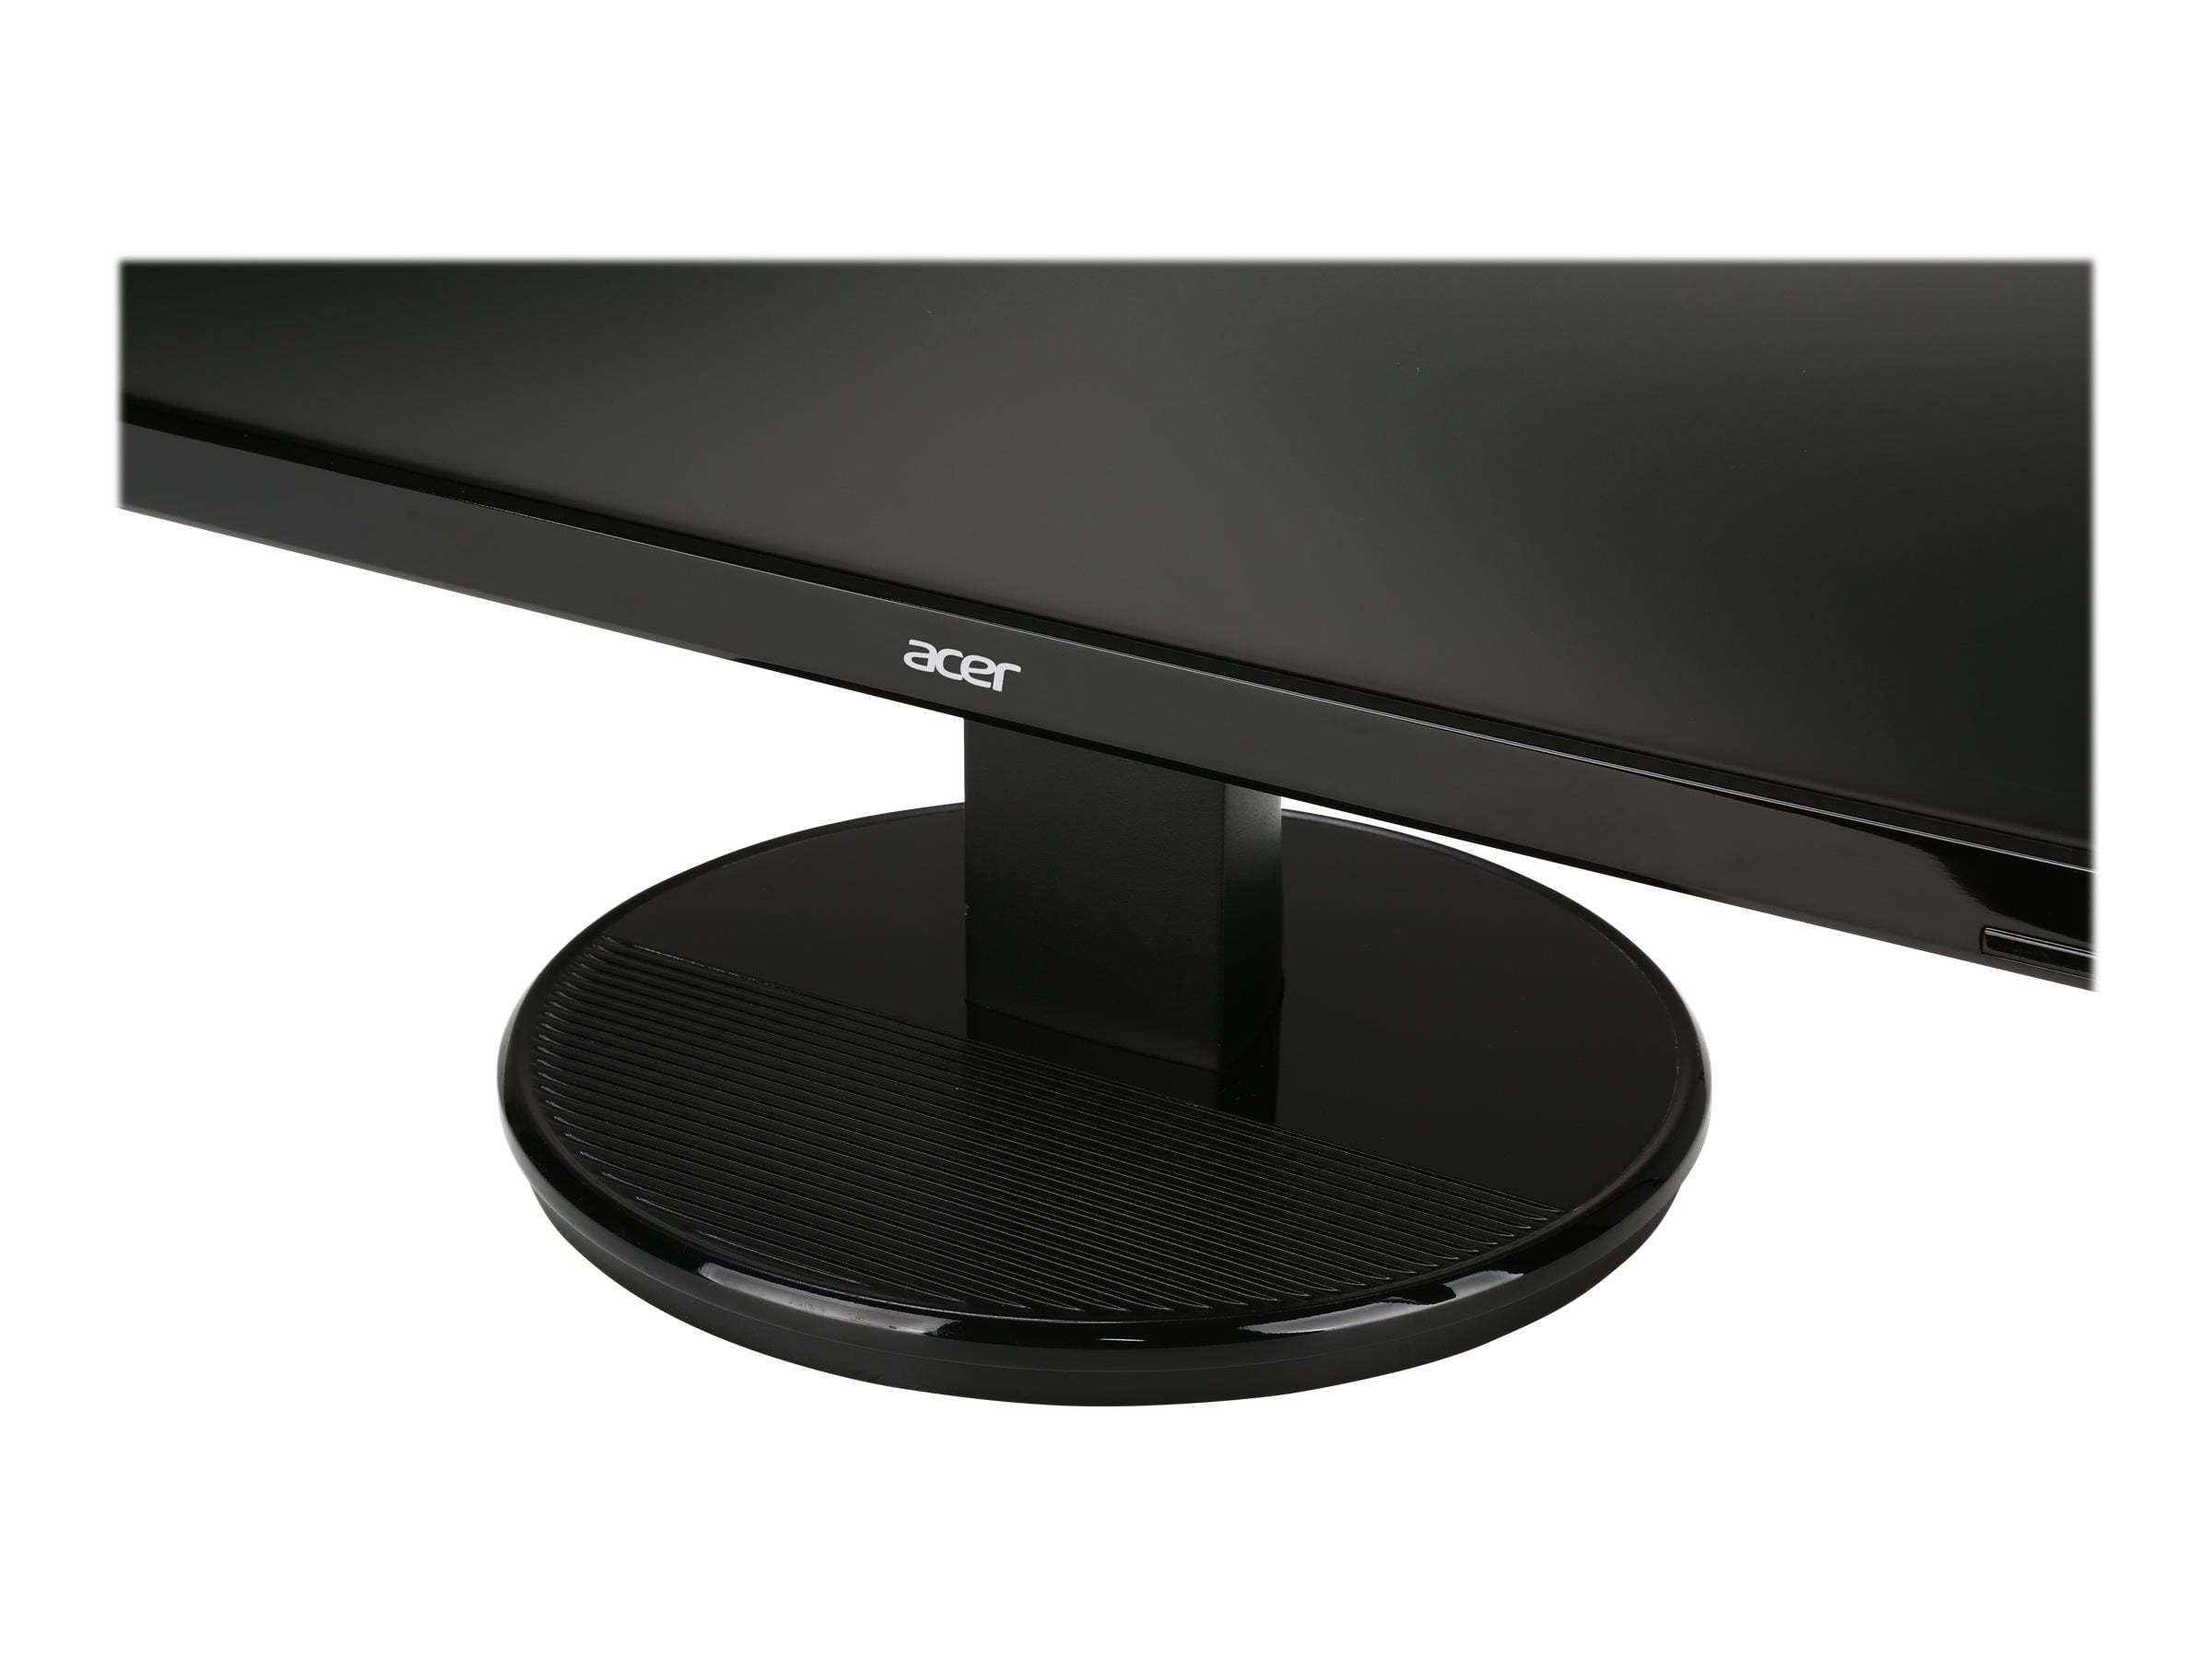 Acer KG241Pbmidpx - Écran LED - 24 - 1920 x 1080 Full HD (1080p) @ 144 Hz  - TN - 350 cd/m² - 1 ms - HDMI, DVI, DisplayPort - haut-parleurs - noir